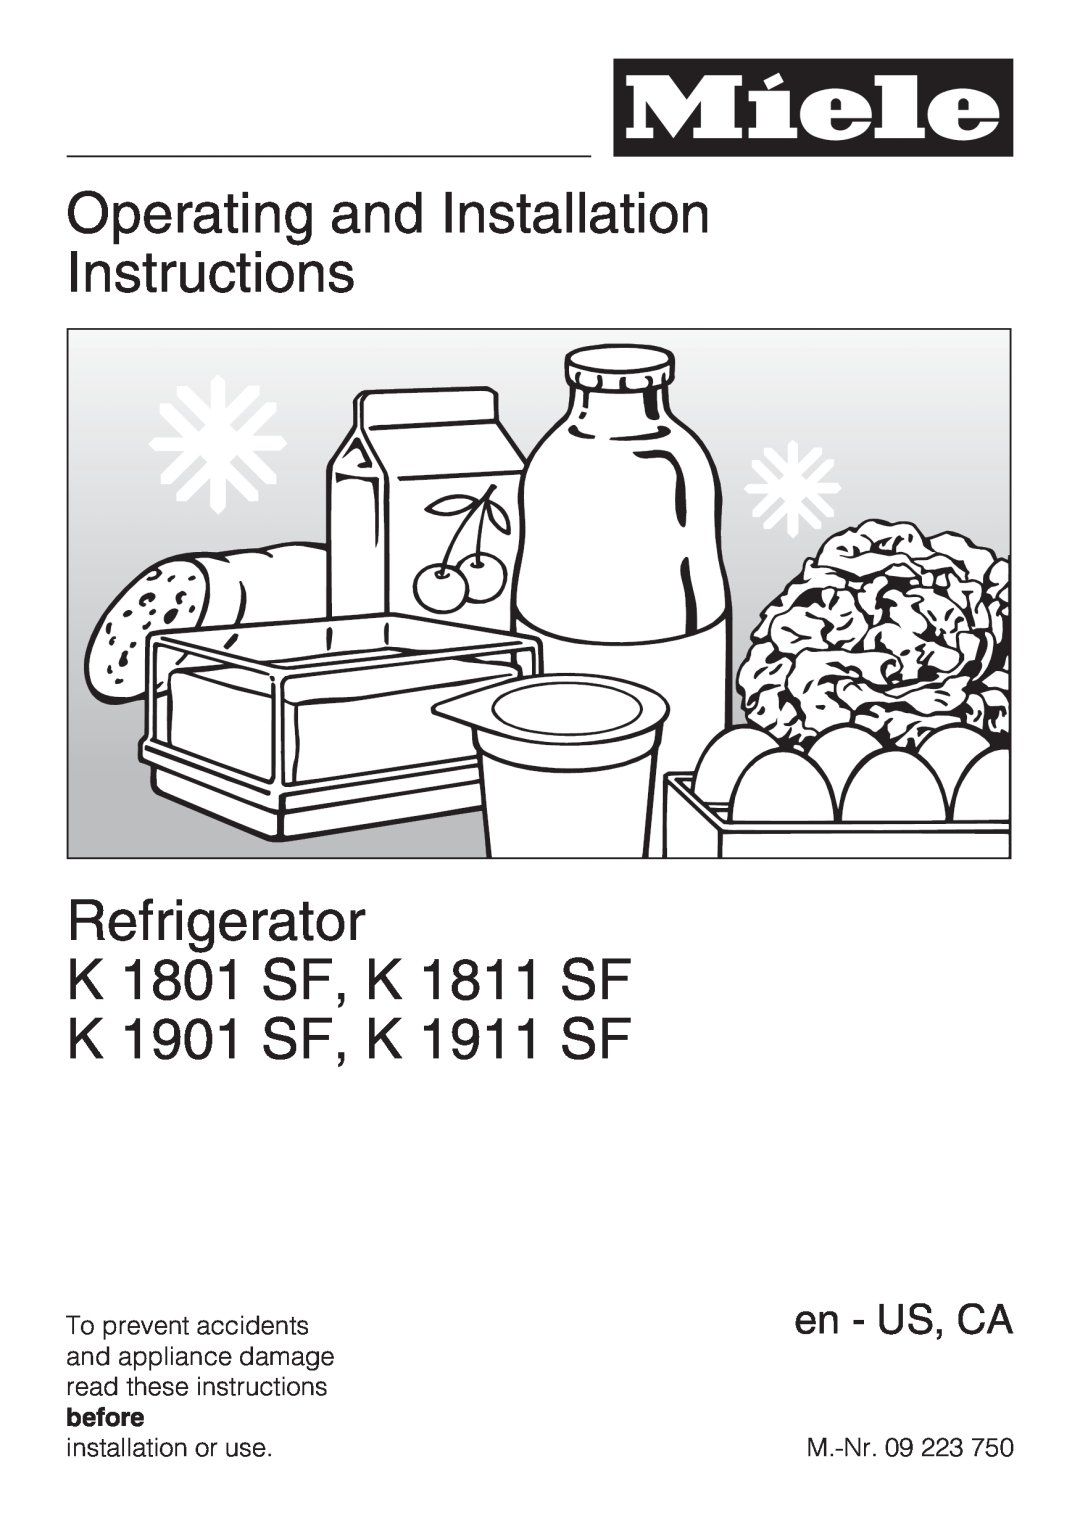 Miele K 1801 SF, K 1911 SF installation instructions Operating and Installation Instructions, Refrigerator, en - US, CA 